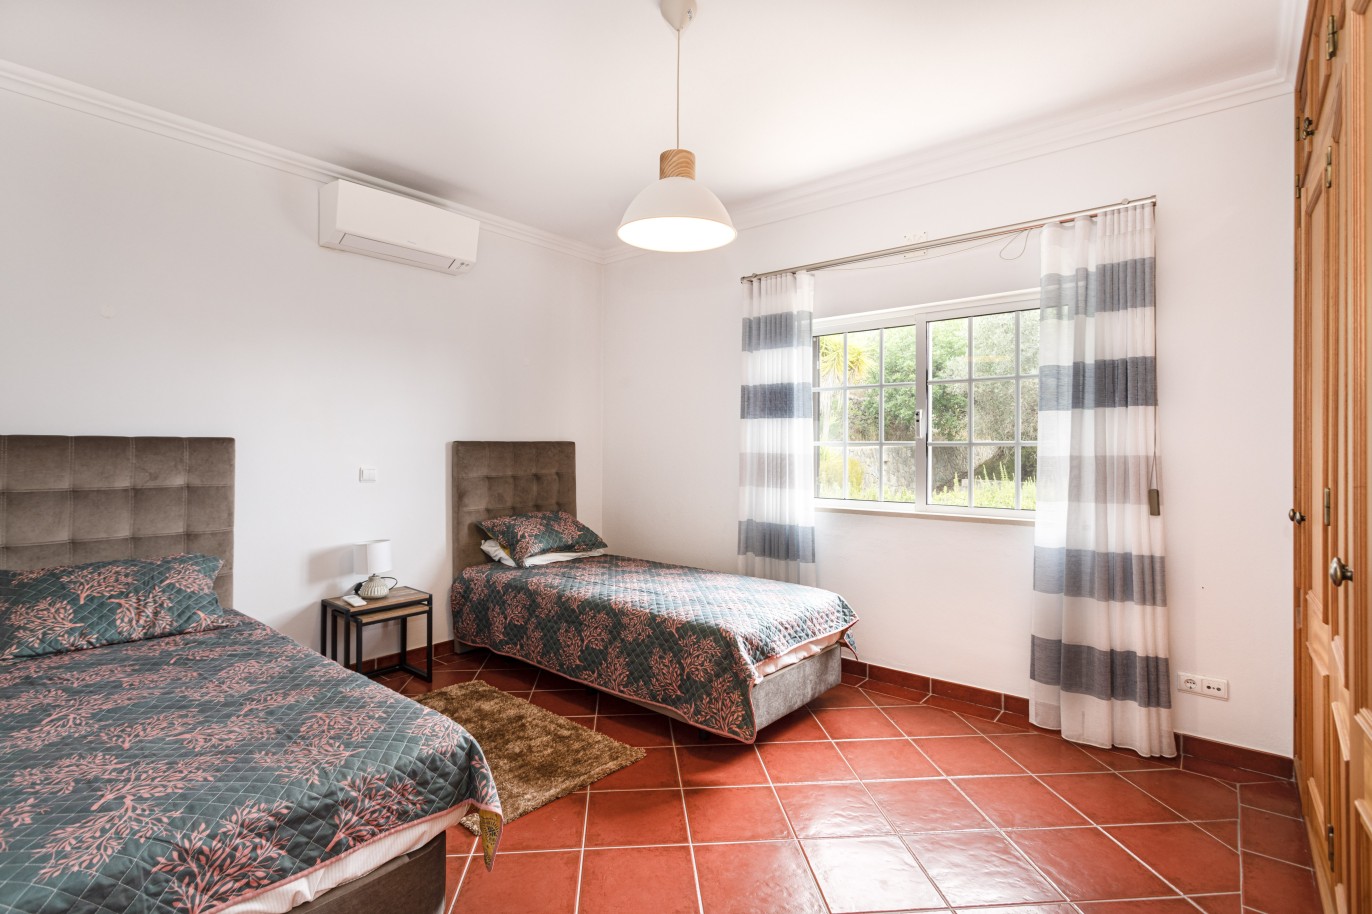 4-Bedroom Villa with swimming pool, for sale in Boliqueime, Loulé, Algarve_242641